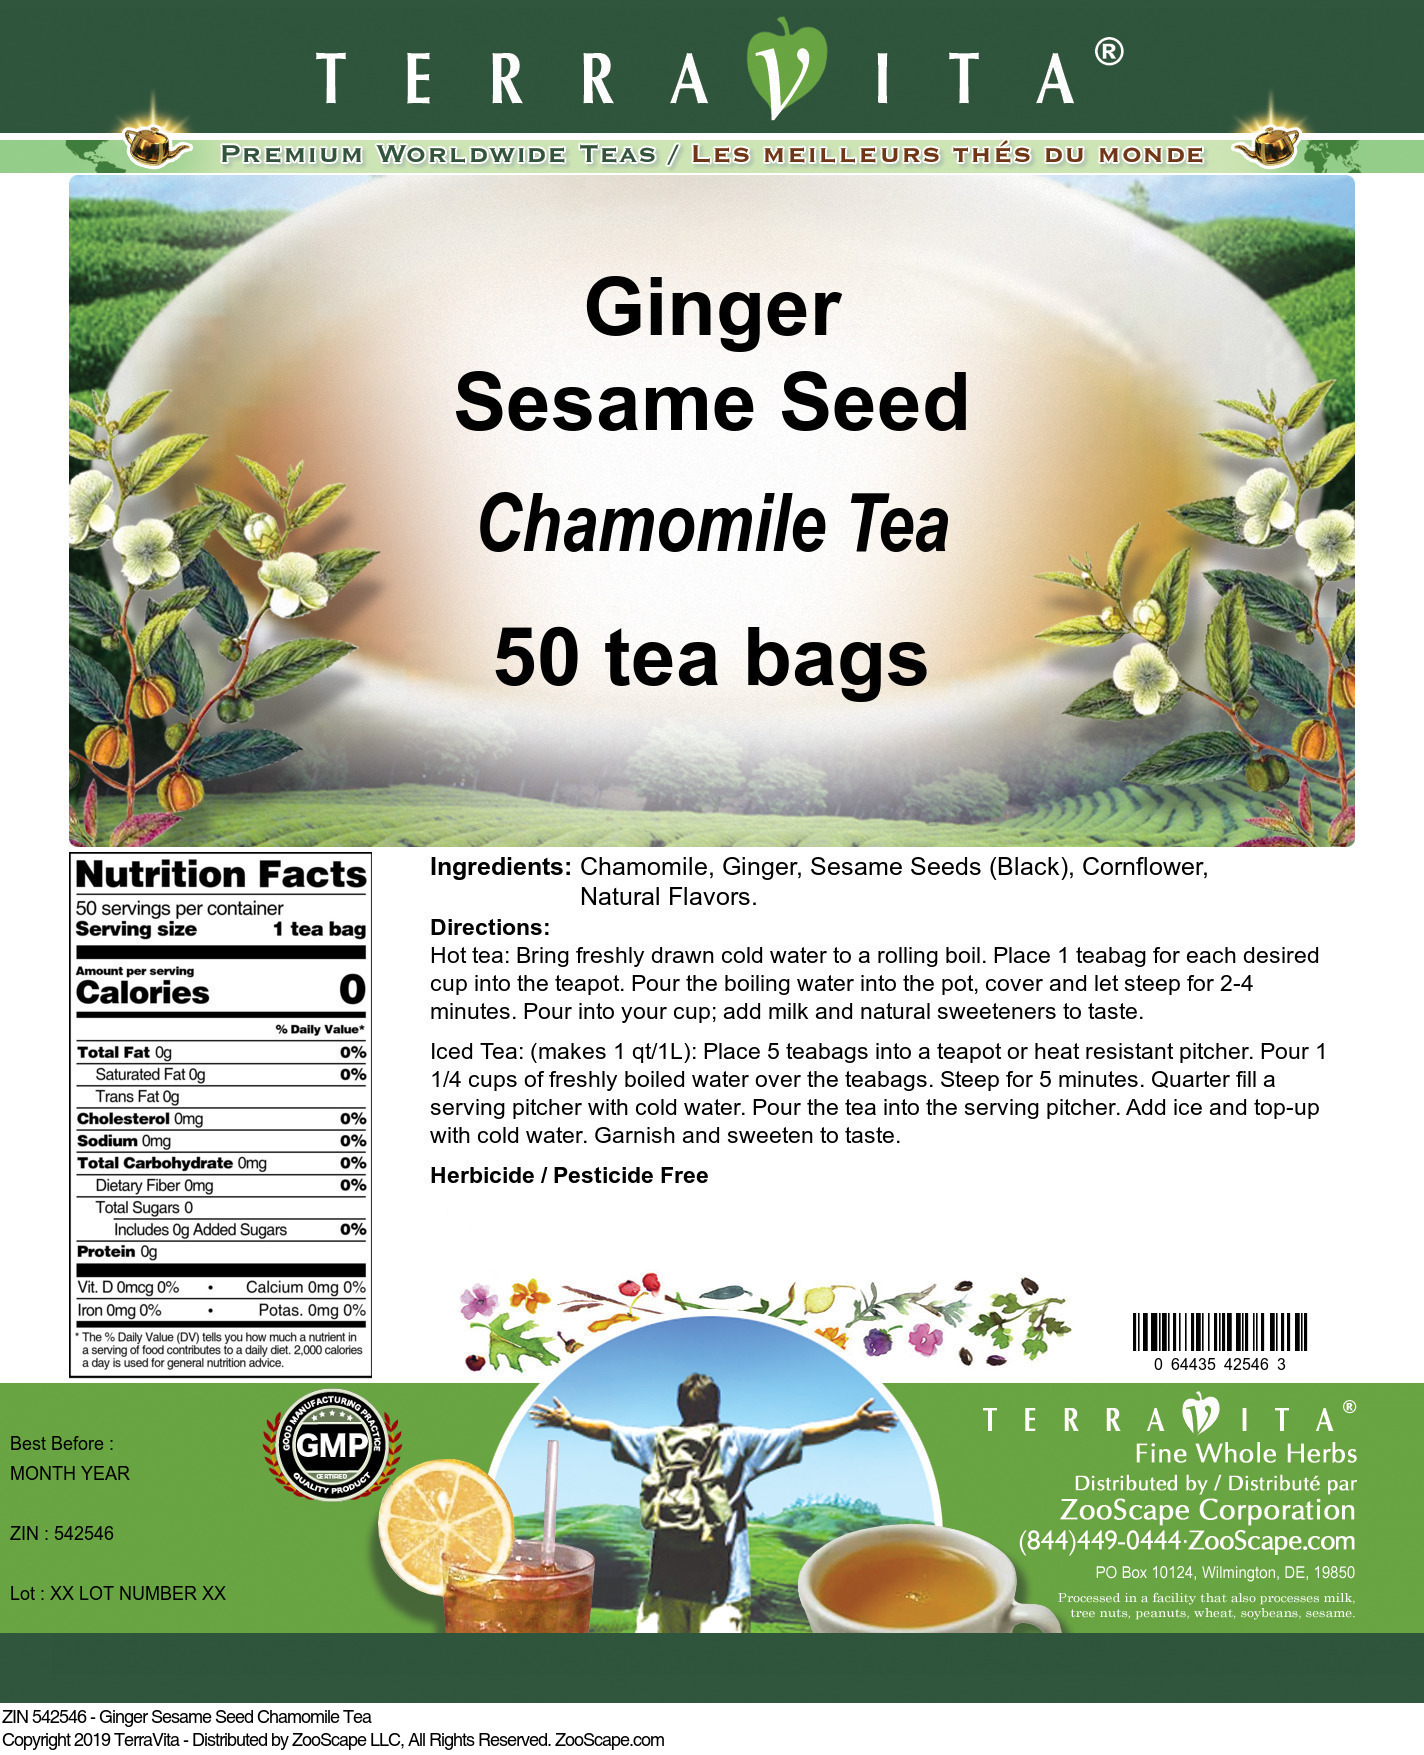 Ginger Sesame Seed Chamomile Tea - Label